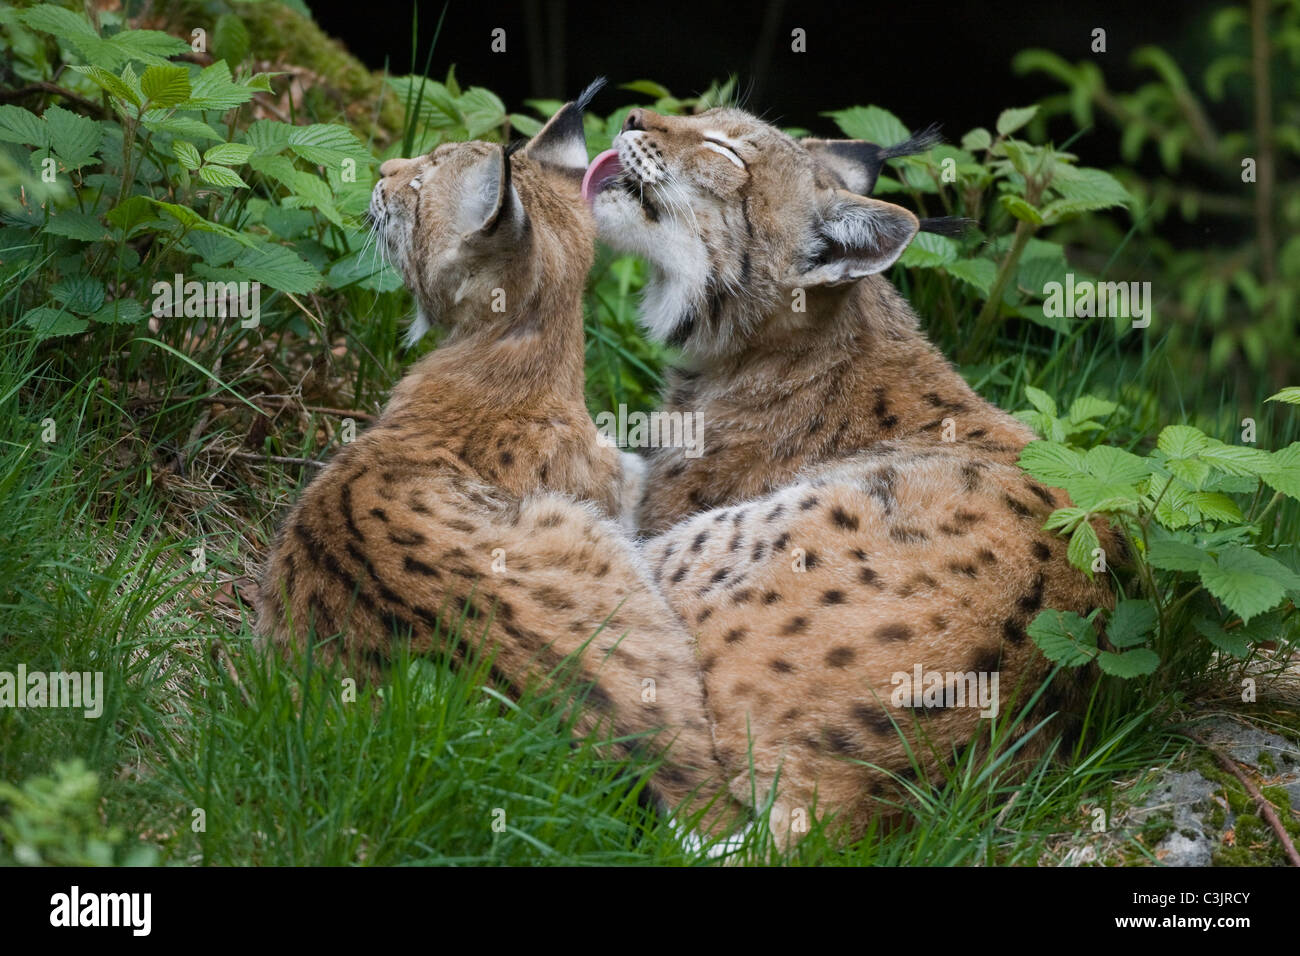 Luchs mit ein jaehrigem Jungtier, Felis lynx, Lyx with one year old young, NP Bayerischer Wald, Bavarian forest national park Stock Photo